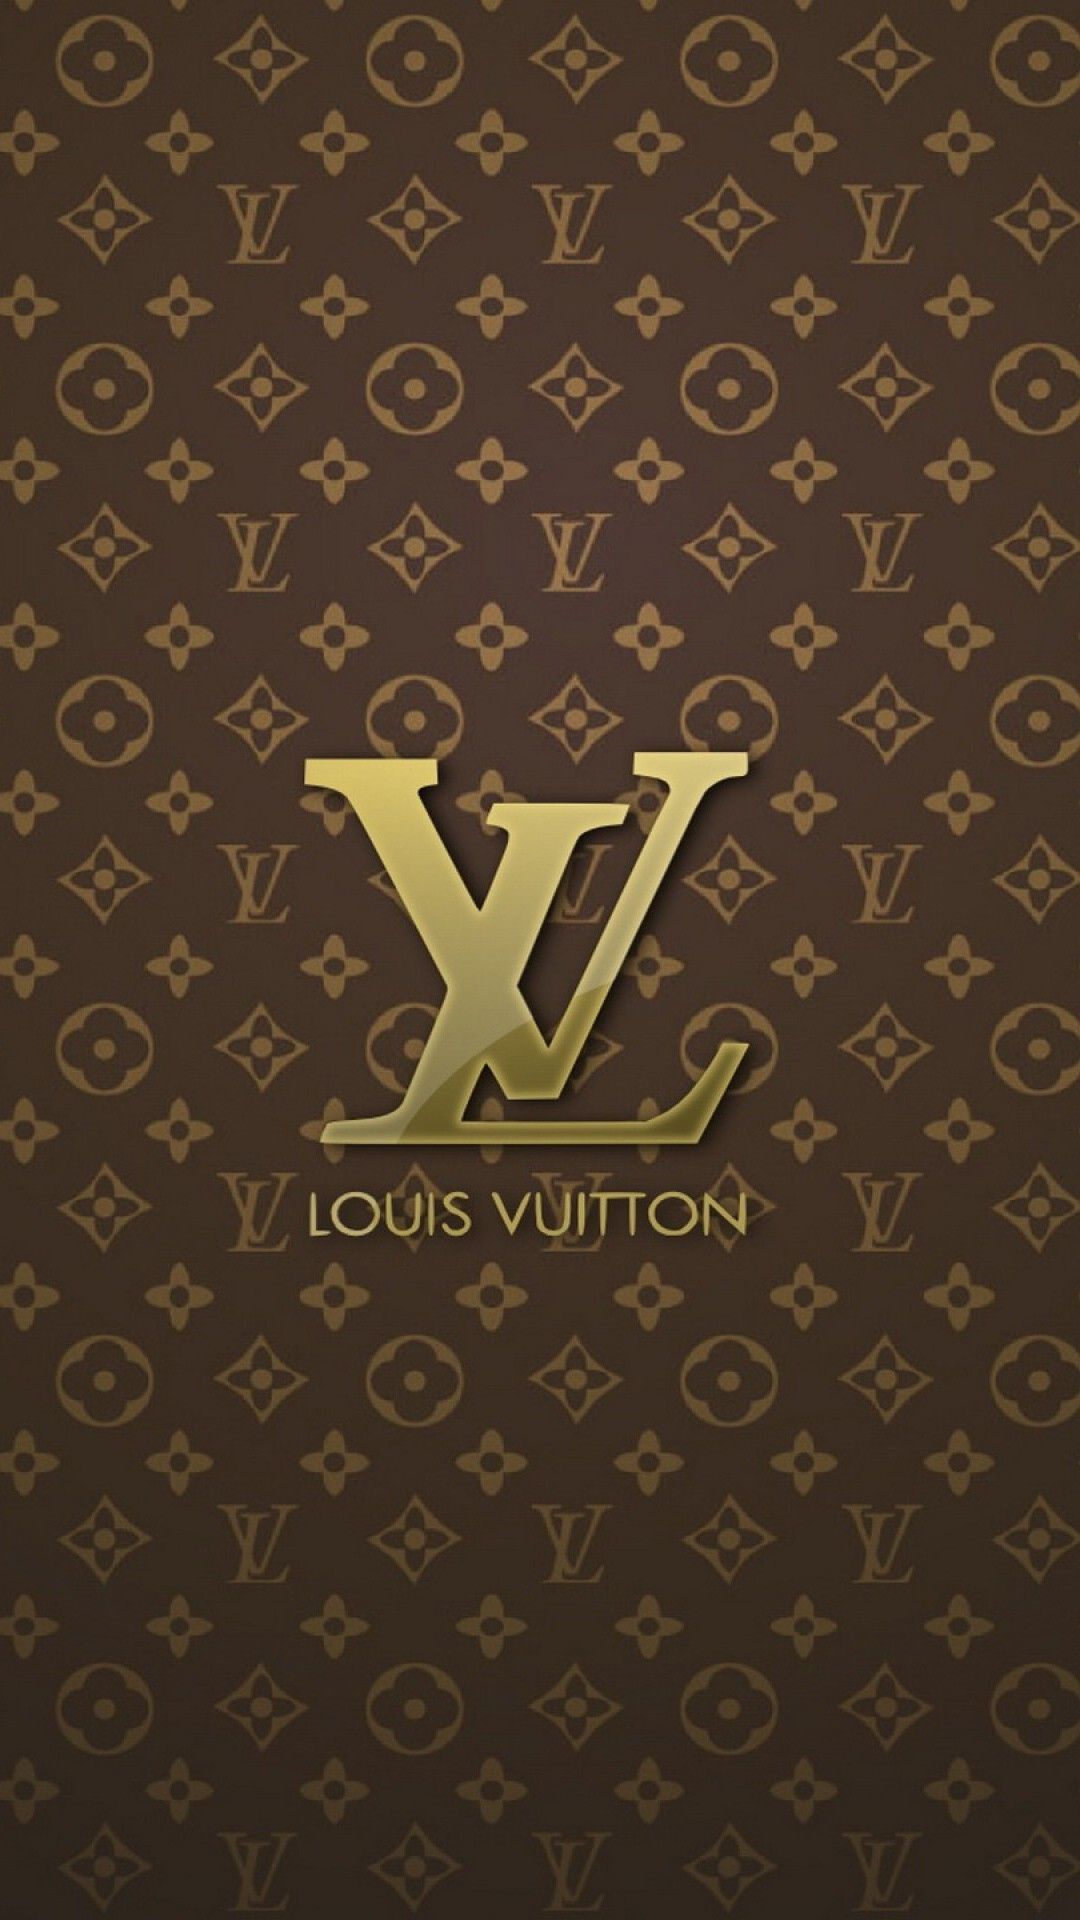 Louis Vuitton Logo Smartphone Wallpaper and Lockscreen HD. Louis